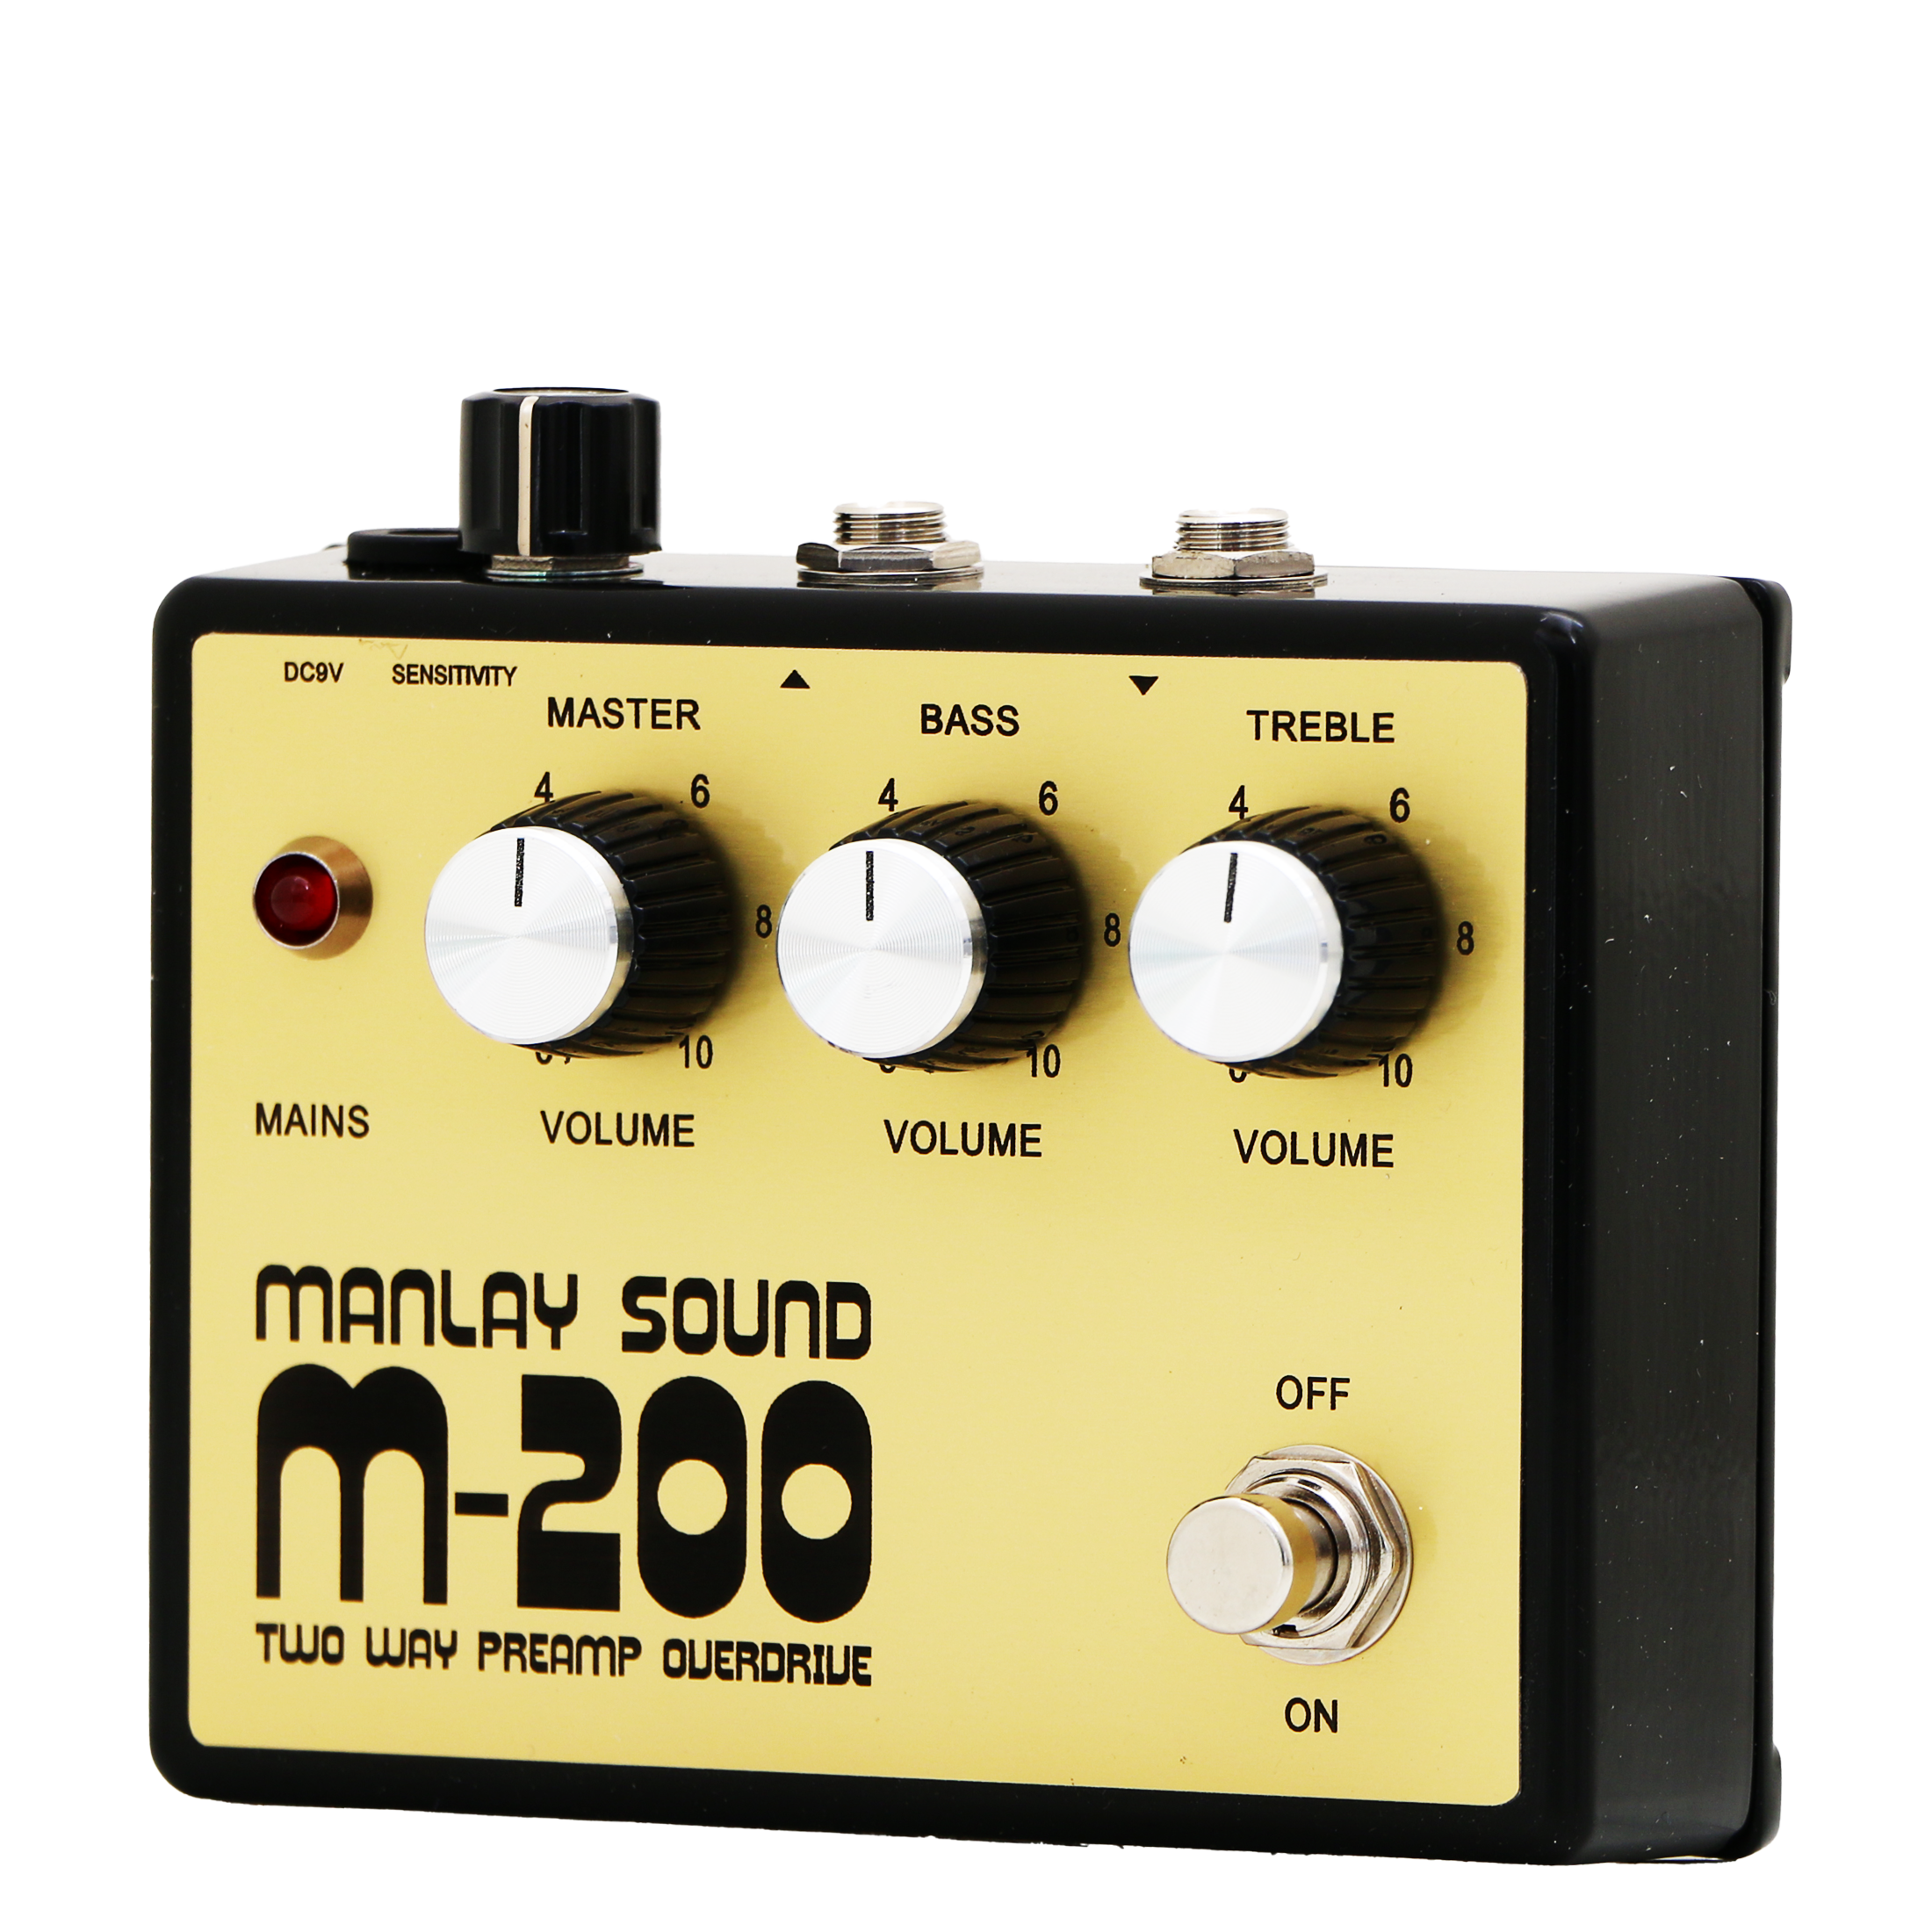 Manlay sound M200 | transparencia.coronango.gob.mx